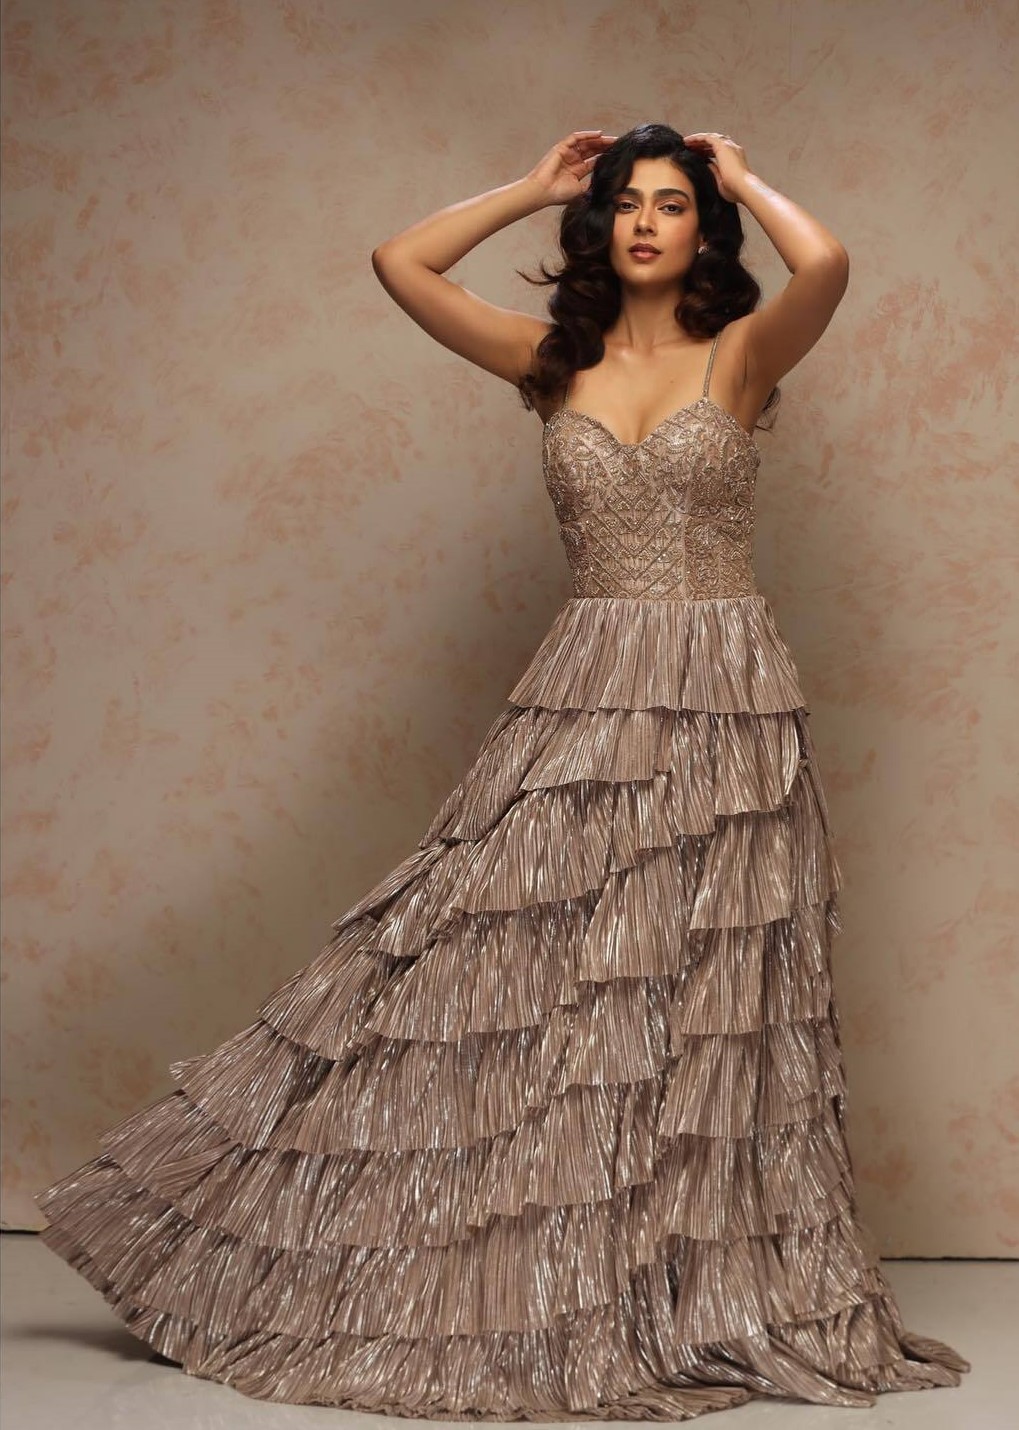 Aakanksha Singh Wearing Kalki Fashion Silver Metallic Multilayer Gown Perfect Look For Evening Parties